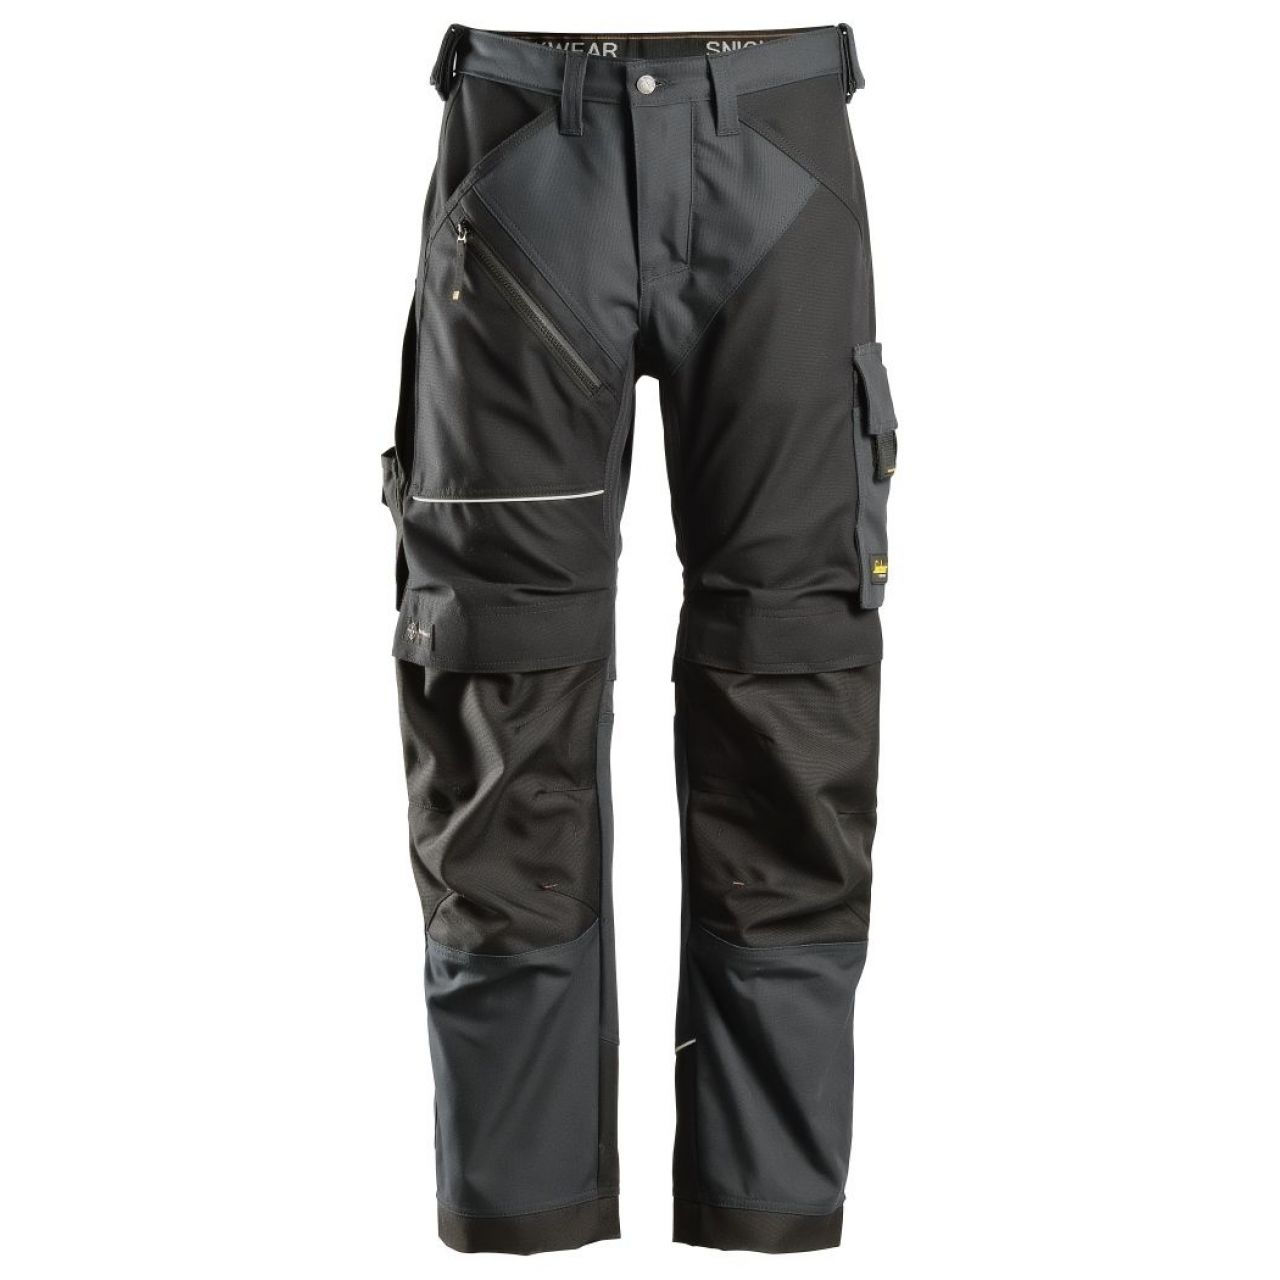 Pantalon Canvas+ RuffWork gris acero-negro talla 100